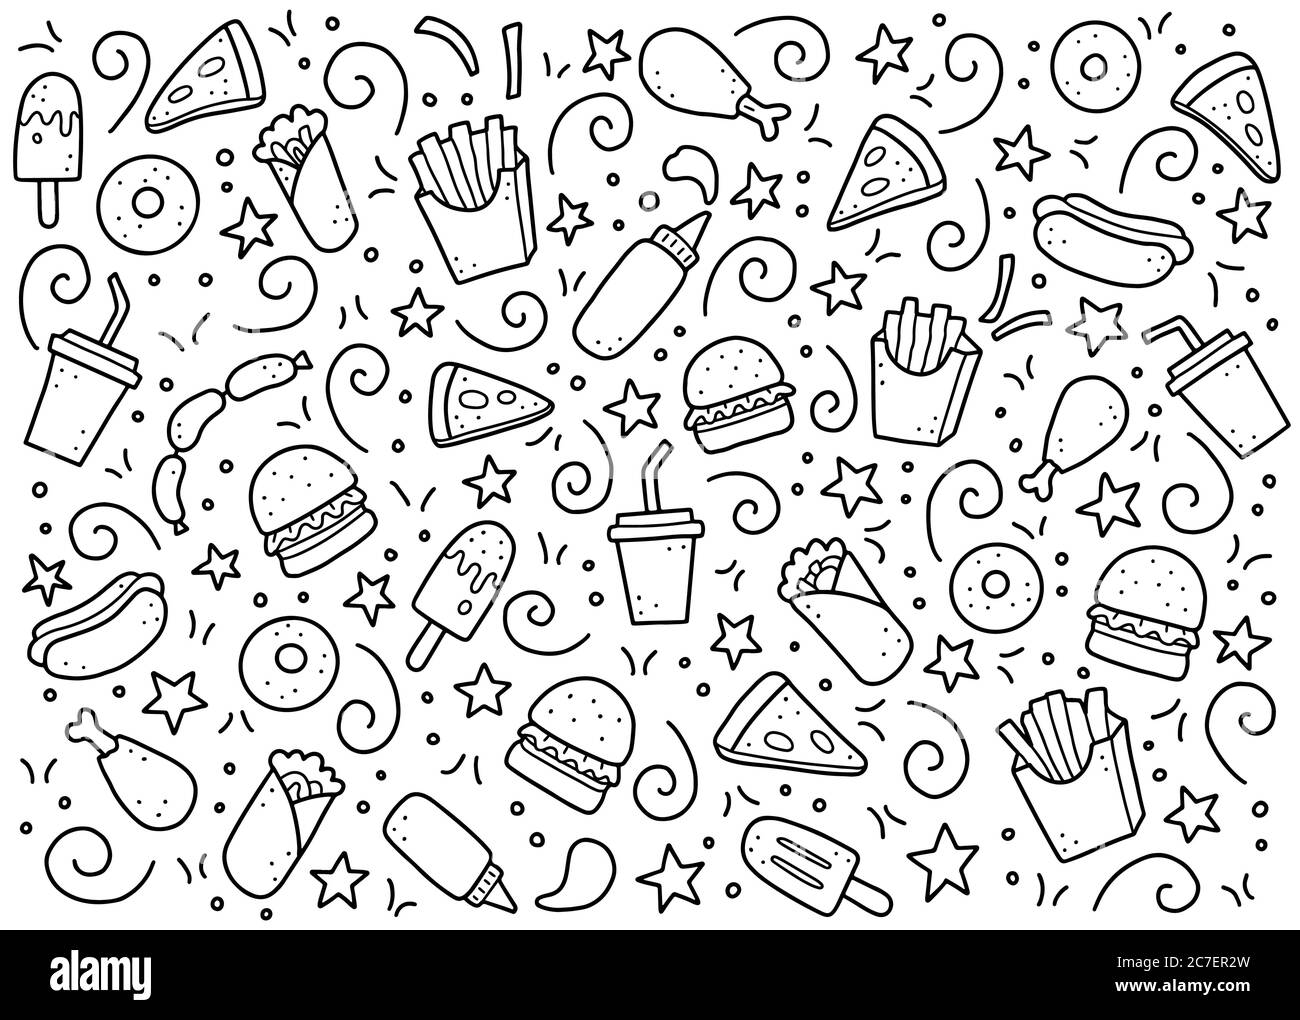 Hand drawn set of fast food elements, burger, pizza, sandwich, hamburger, snack. Comic doodle sketch style. Fast food element drawn by digital brush-pen. Vector illustration for icon, menu, frame design. Stock Vector